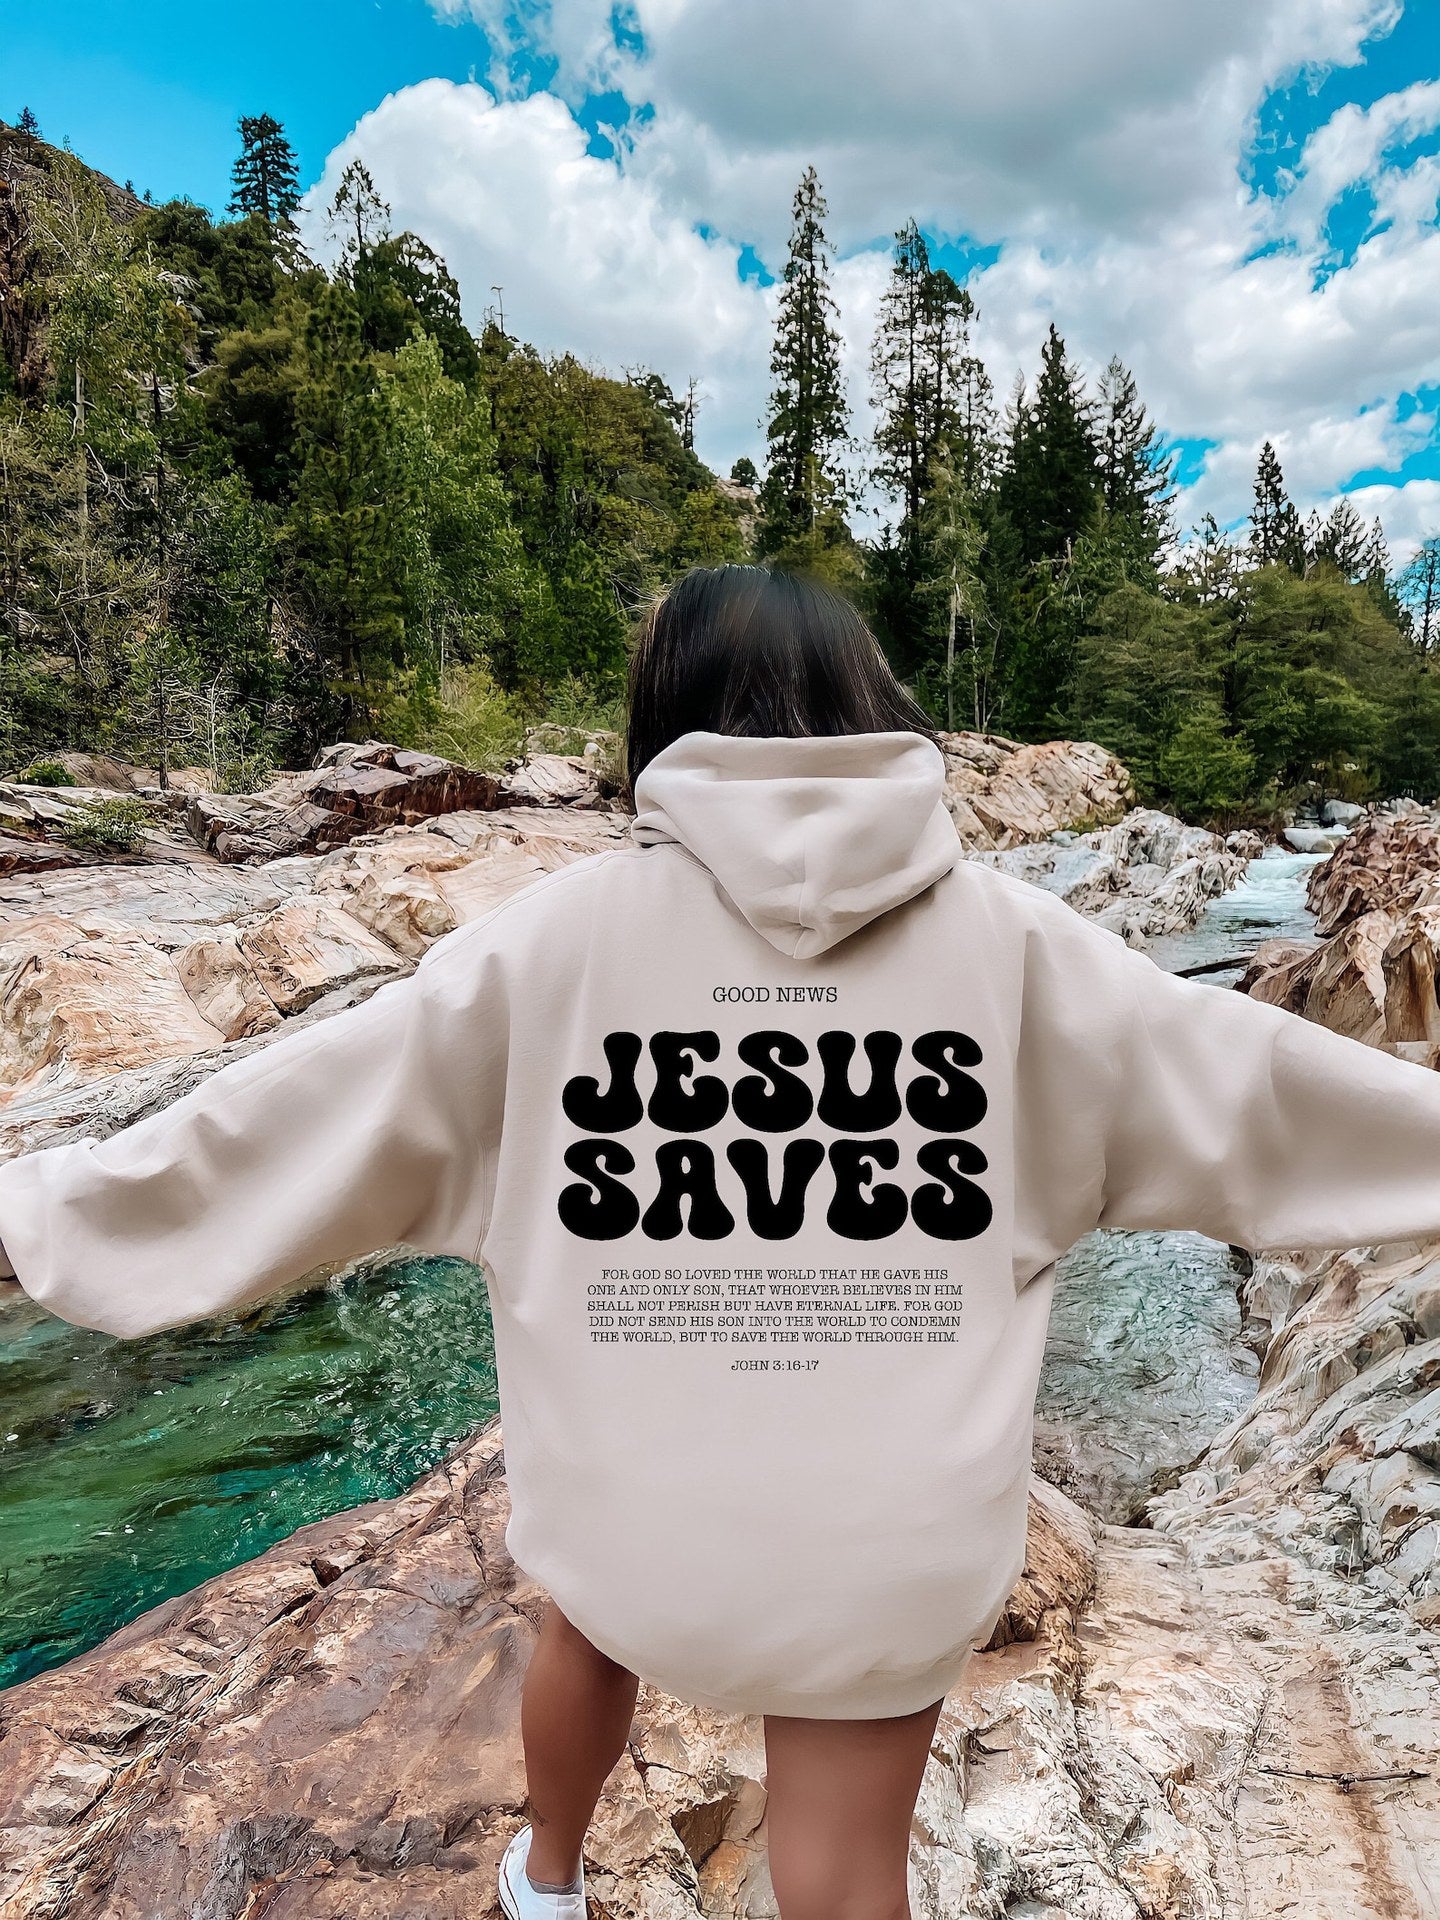 Jesus Saves Hoodie Bible Verses Appear Church Sweater - SIDNEY DREAMS, L.L.C.